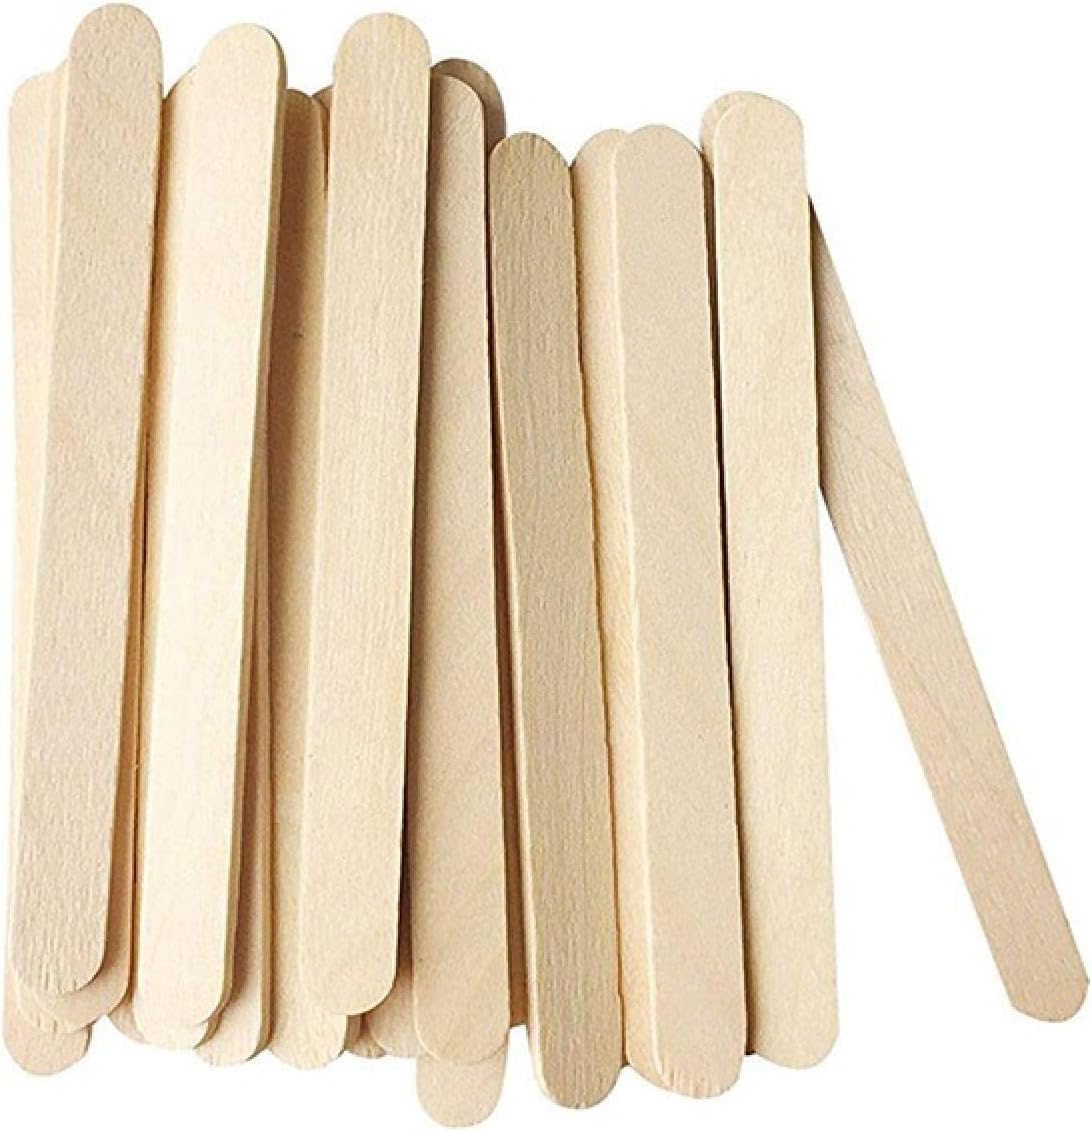 Wood Crafts Sticks - 25pcs